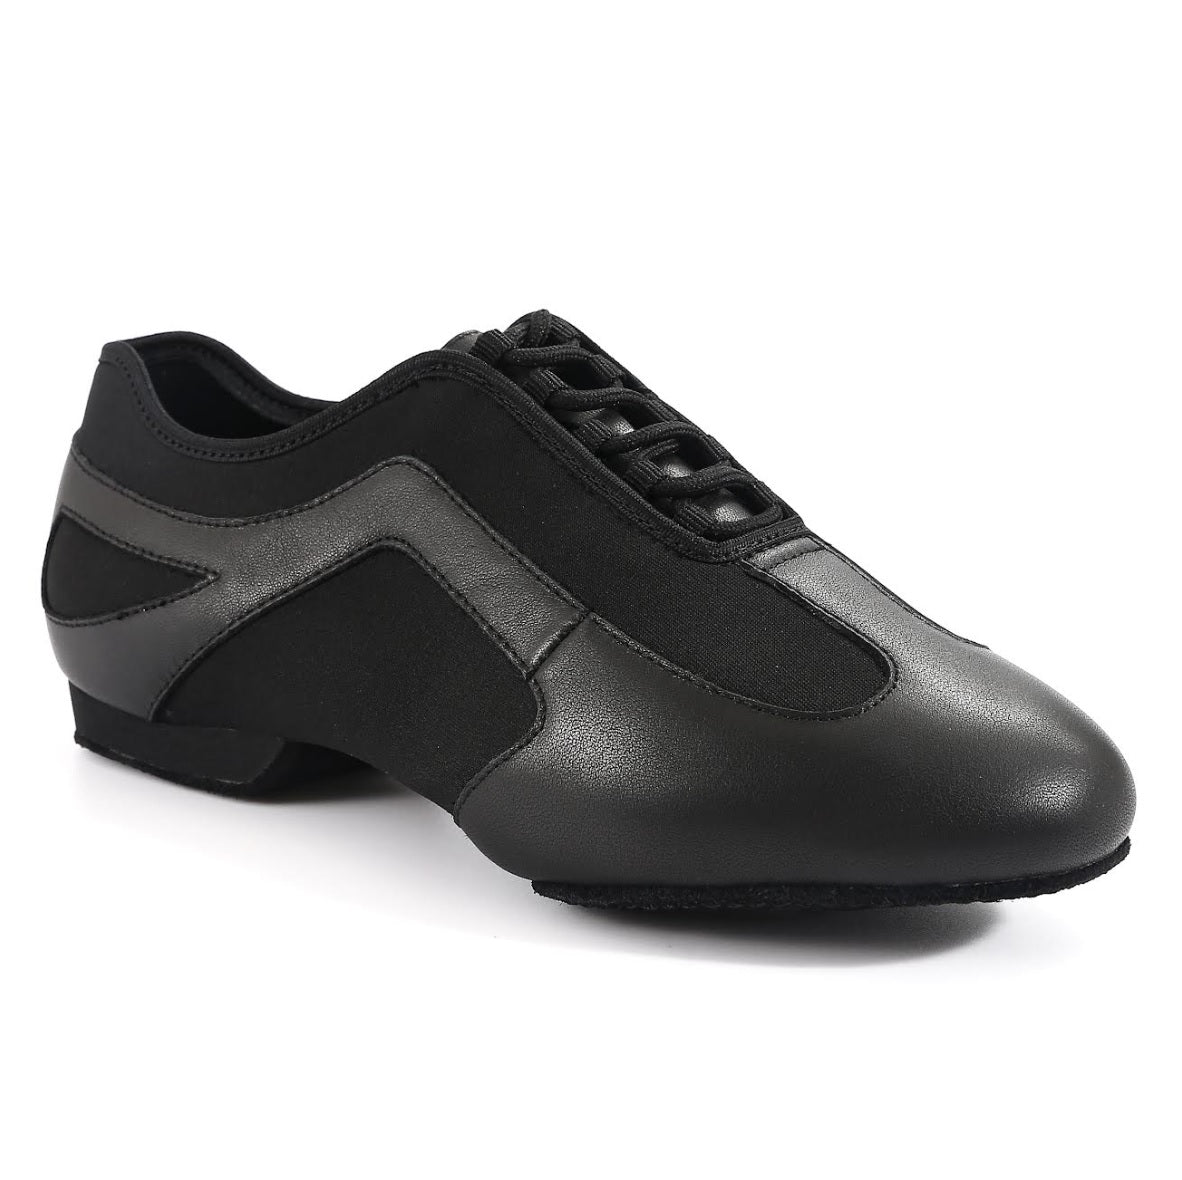 Bloch Tan Tap Shoes  Dancewear Solutions®